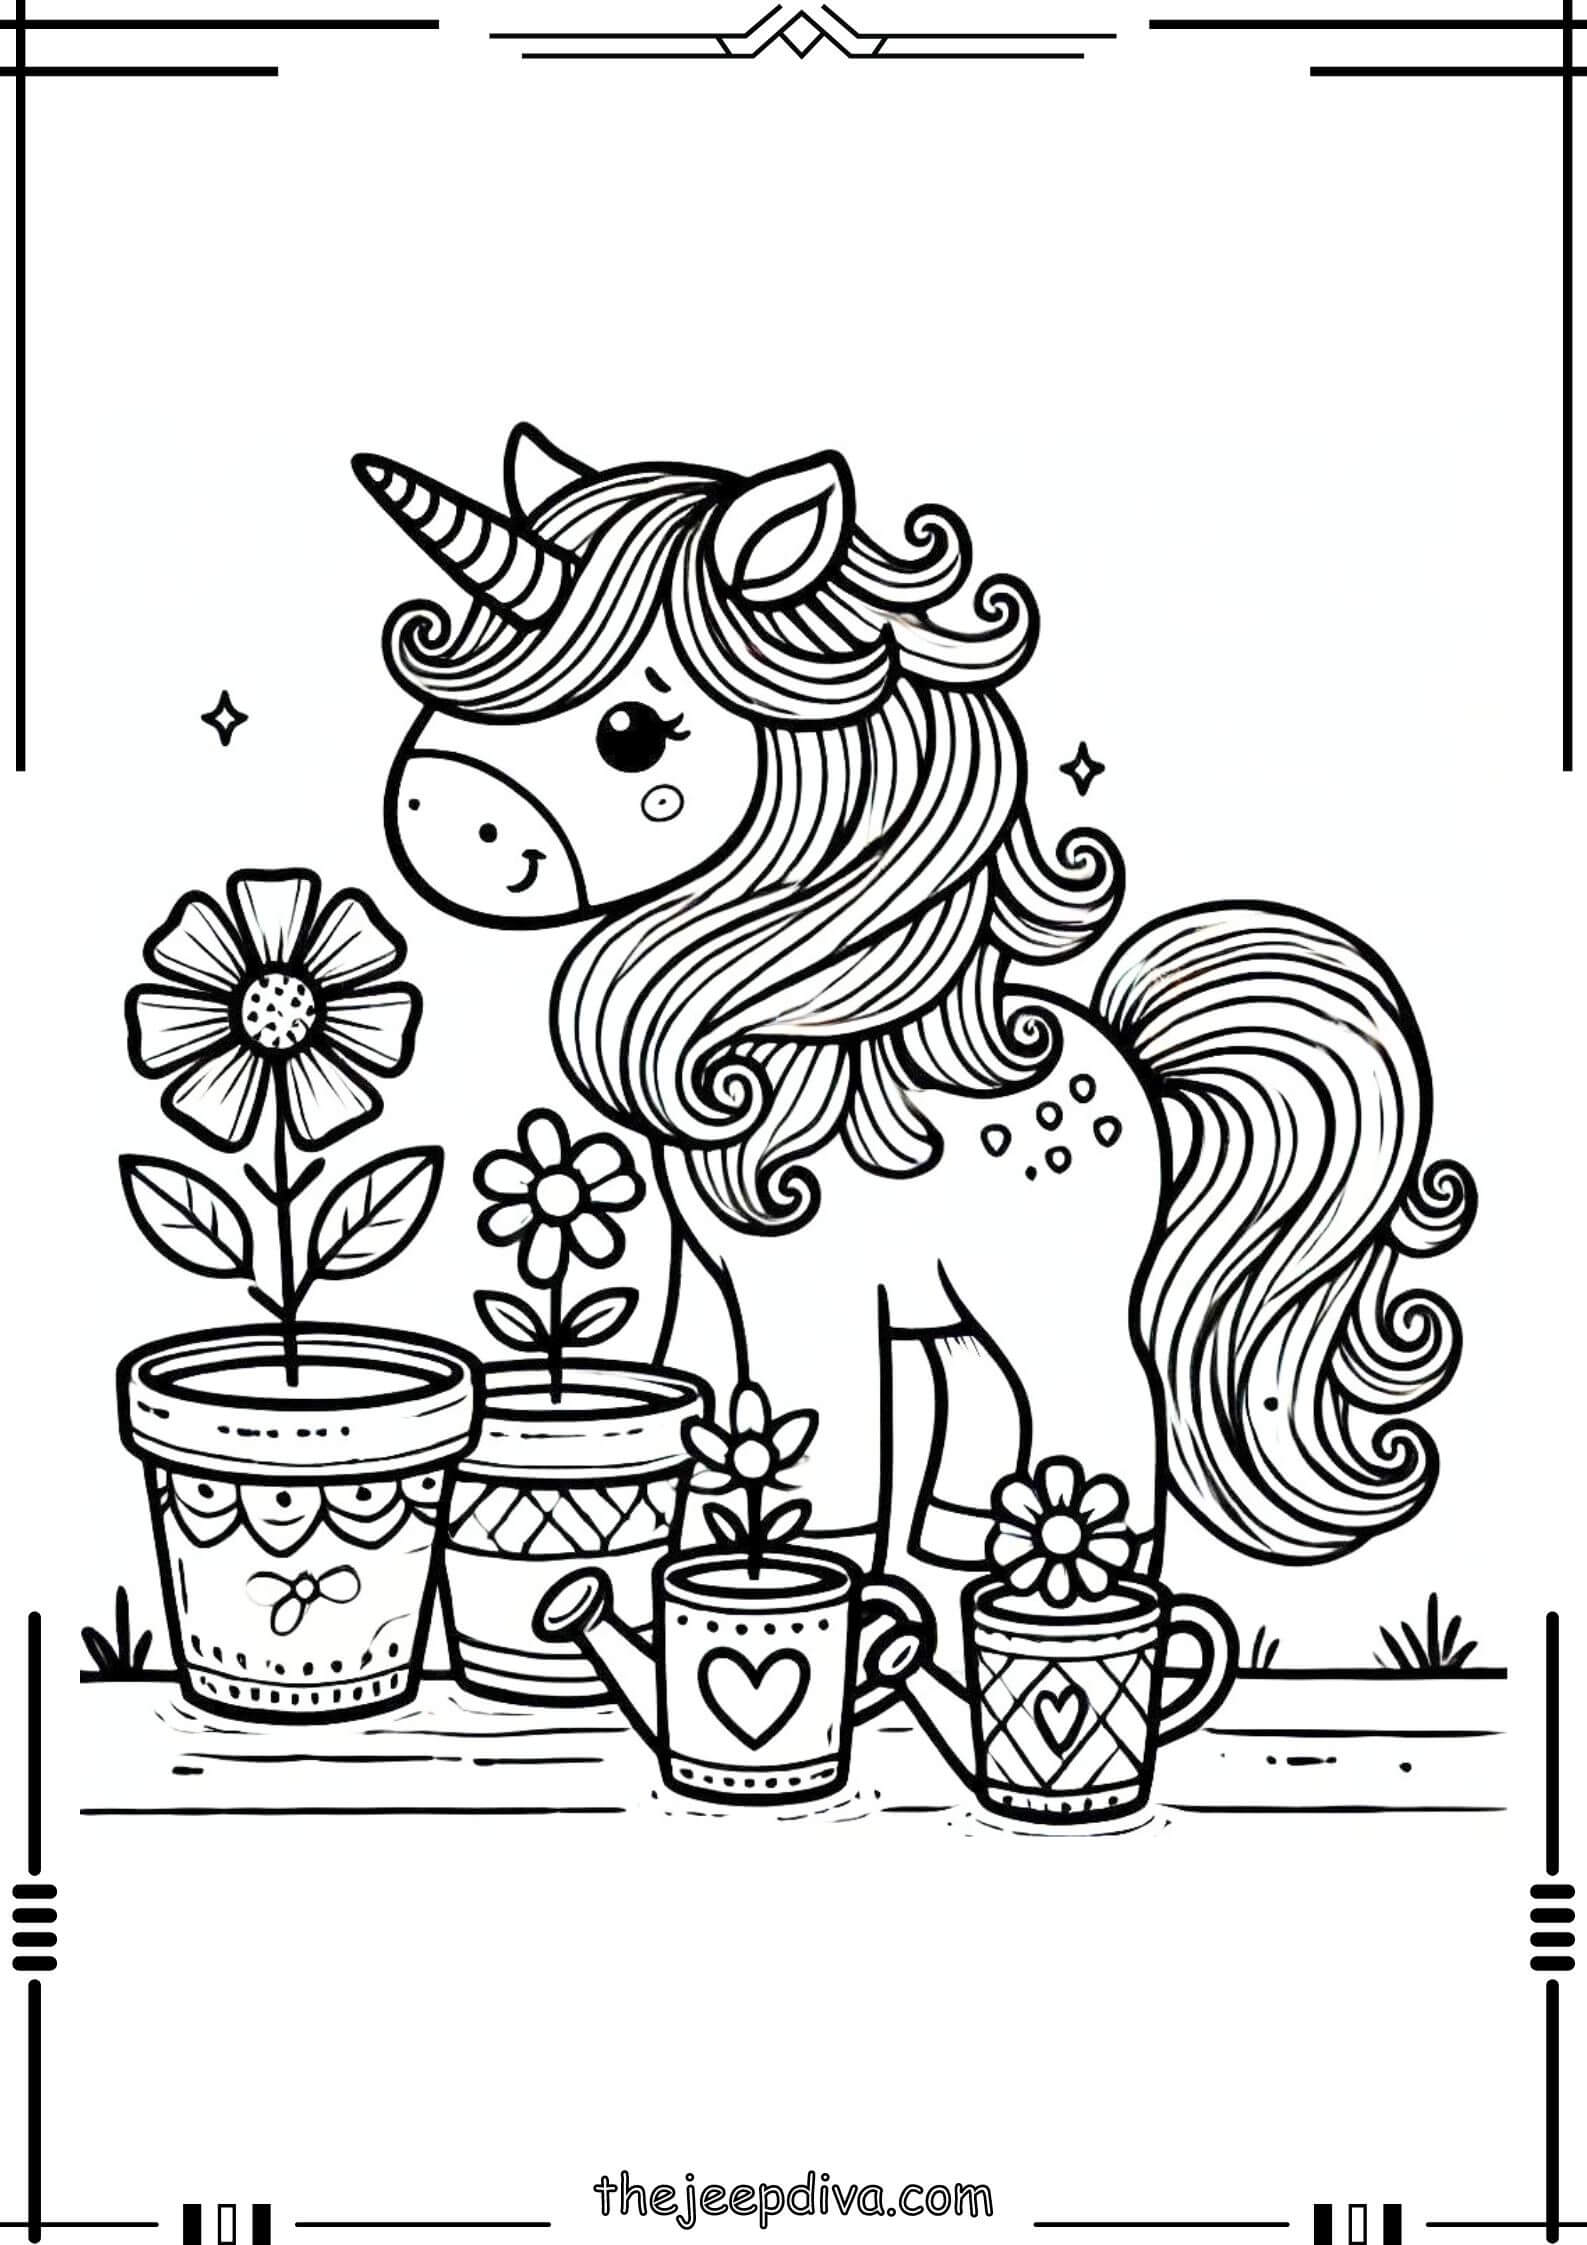 unicorn-coloring-page-medium-17